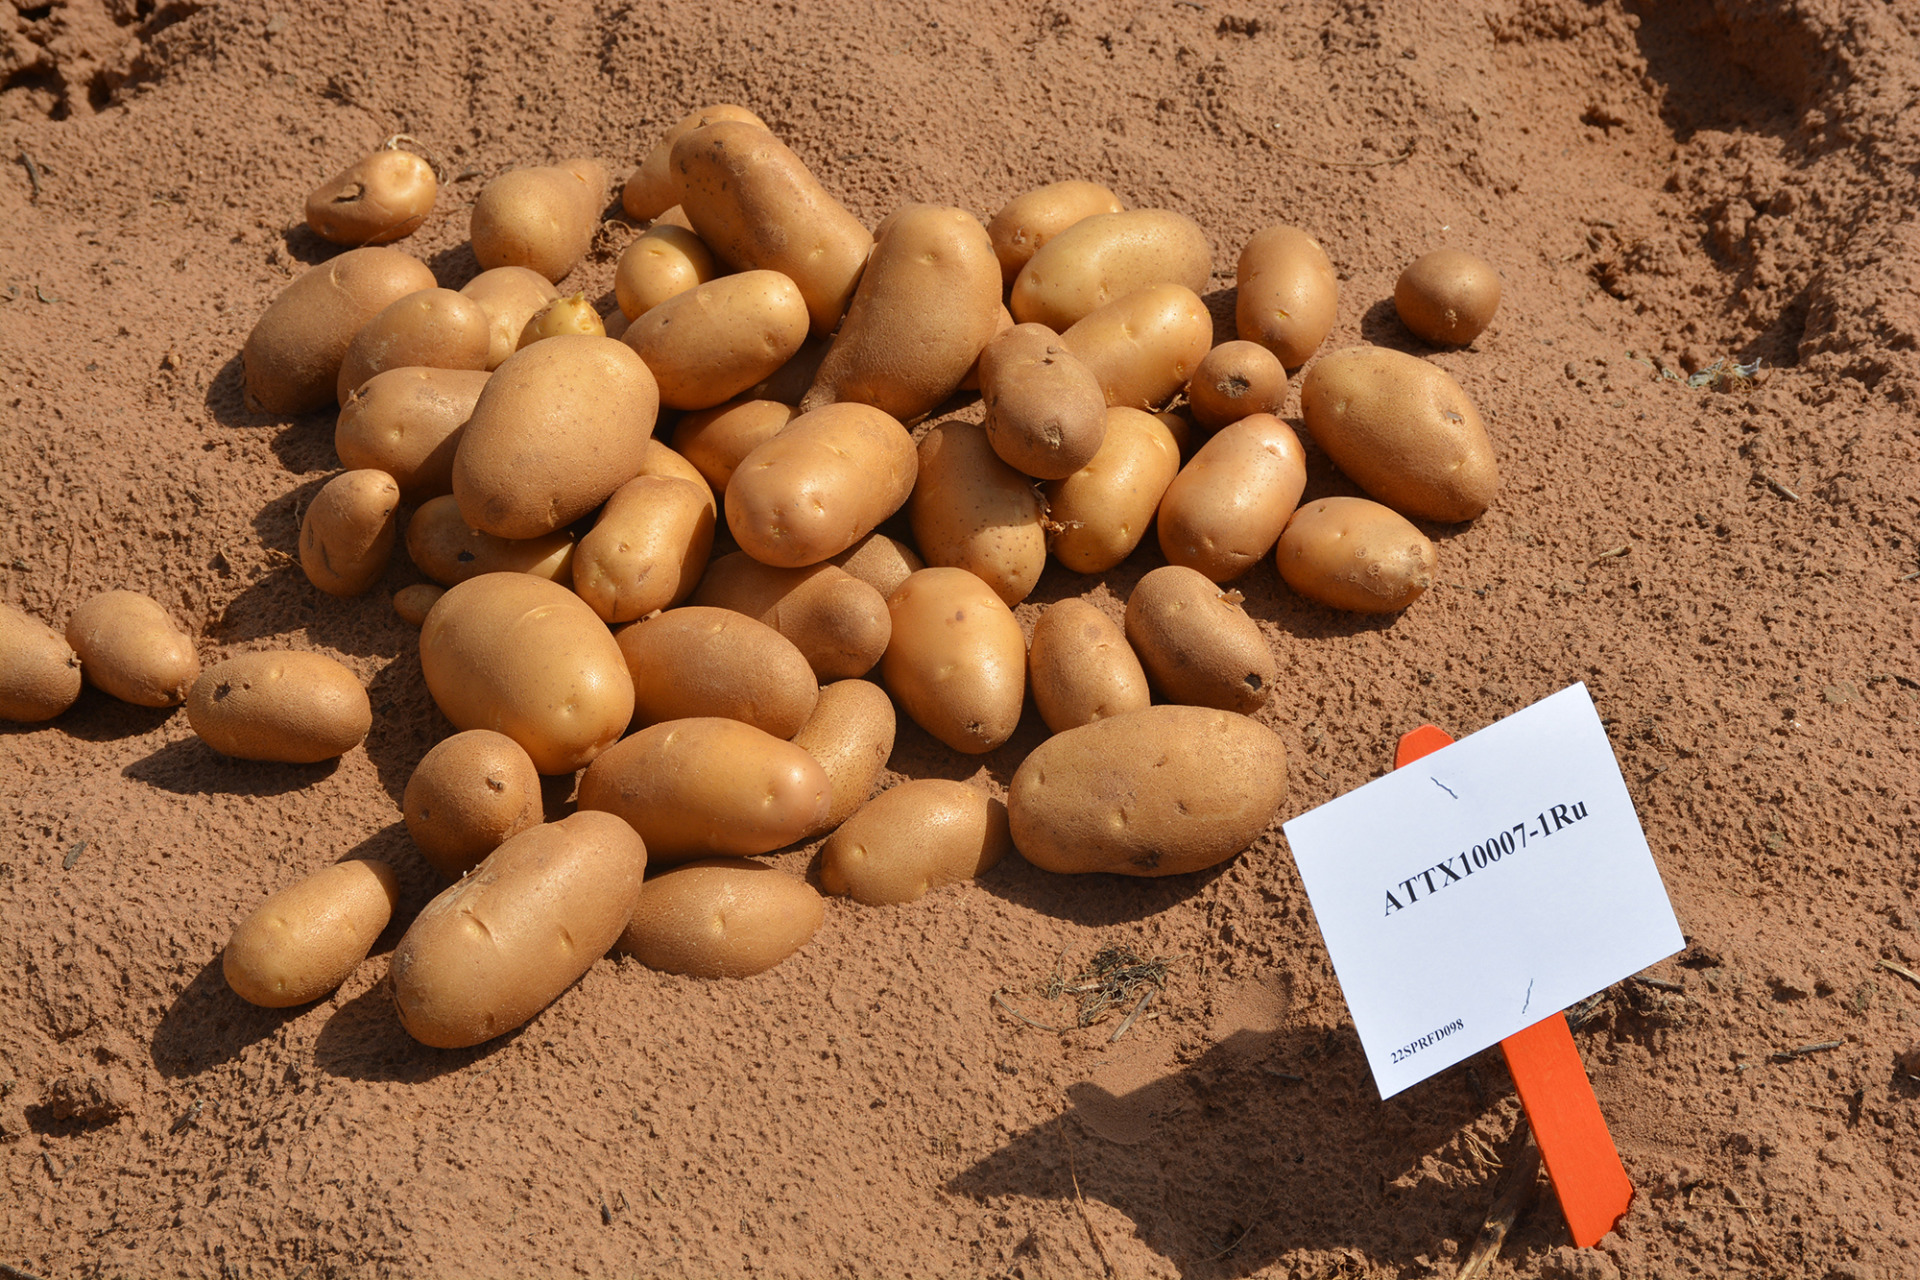  Texas A&M AgriLife breeding variety of potatoes 